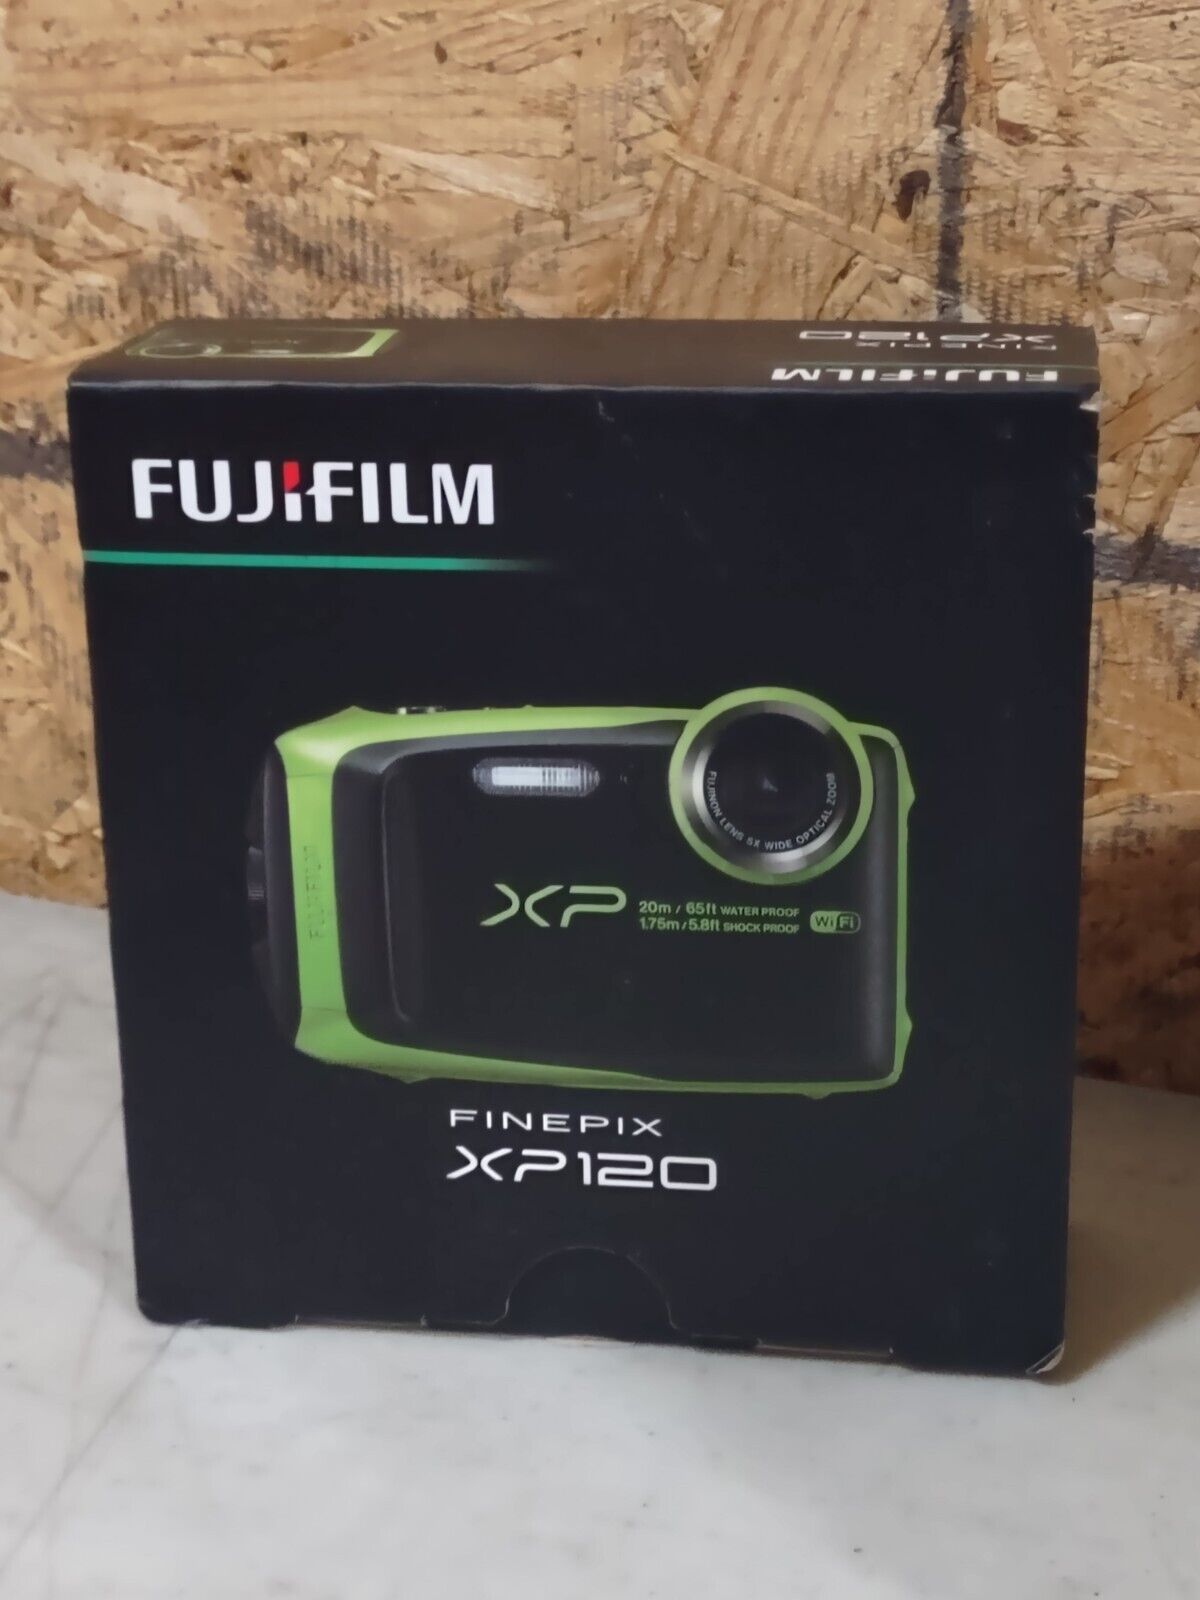 Fujifilm FinePix XP120 Digital Camera - Black/Lime Green for sale 